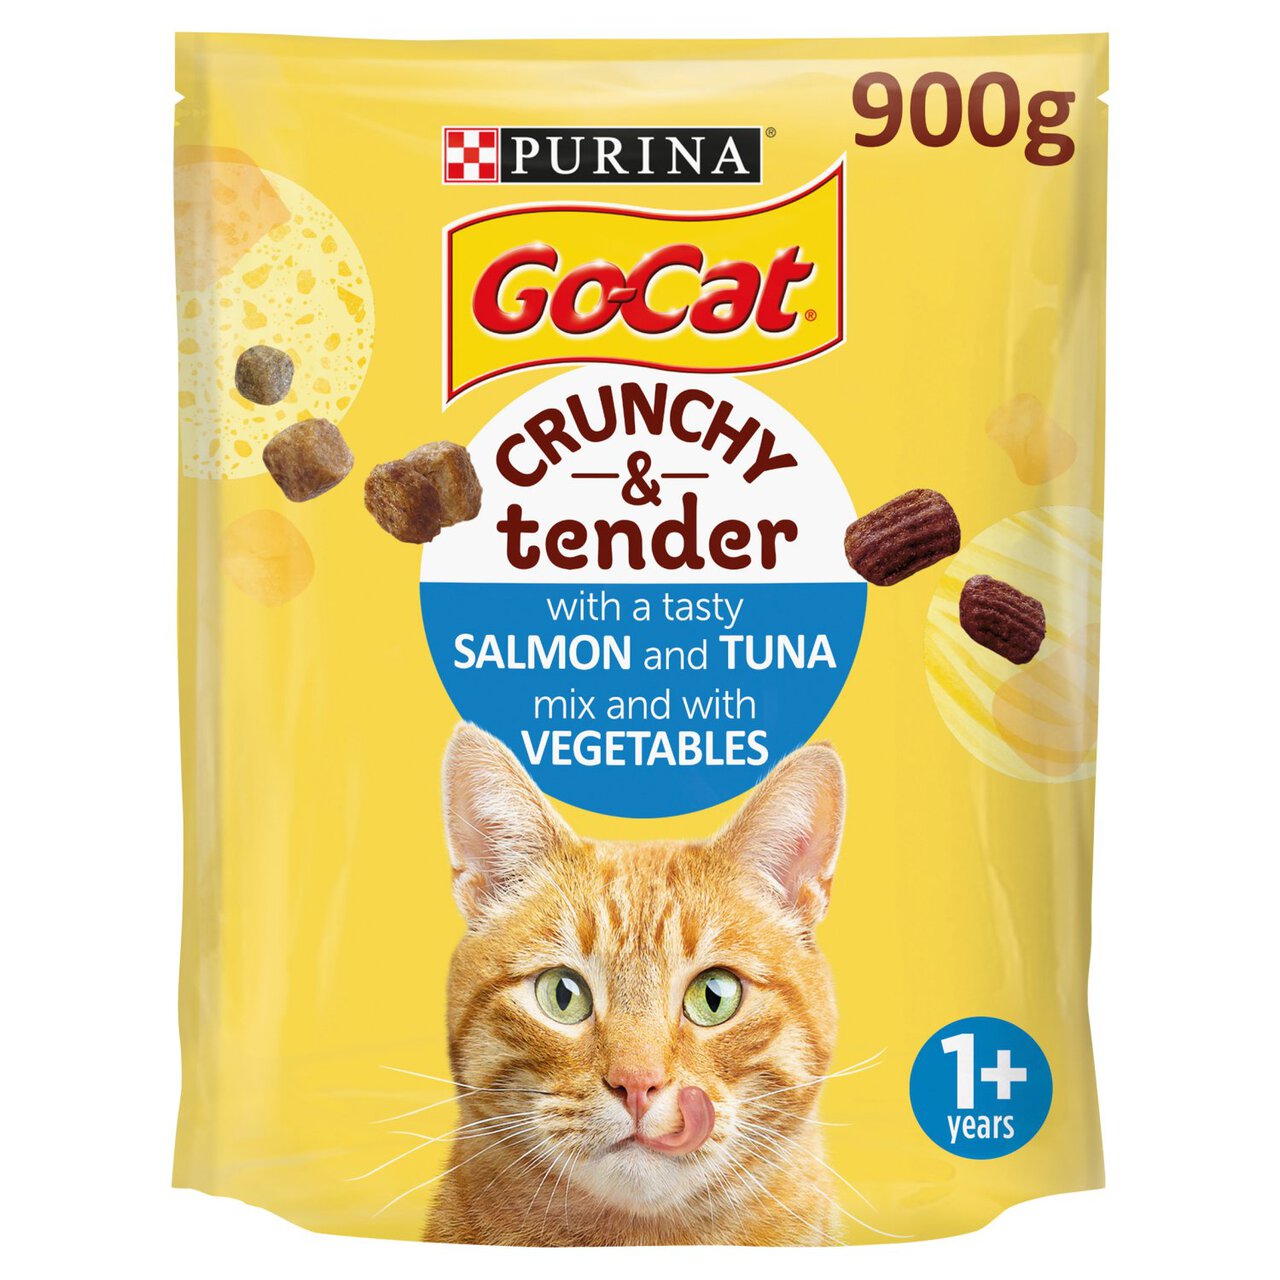 Go-Cat Crunchy & Tender Salmon, Tuna & Veg Dry Cat Food 900g